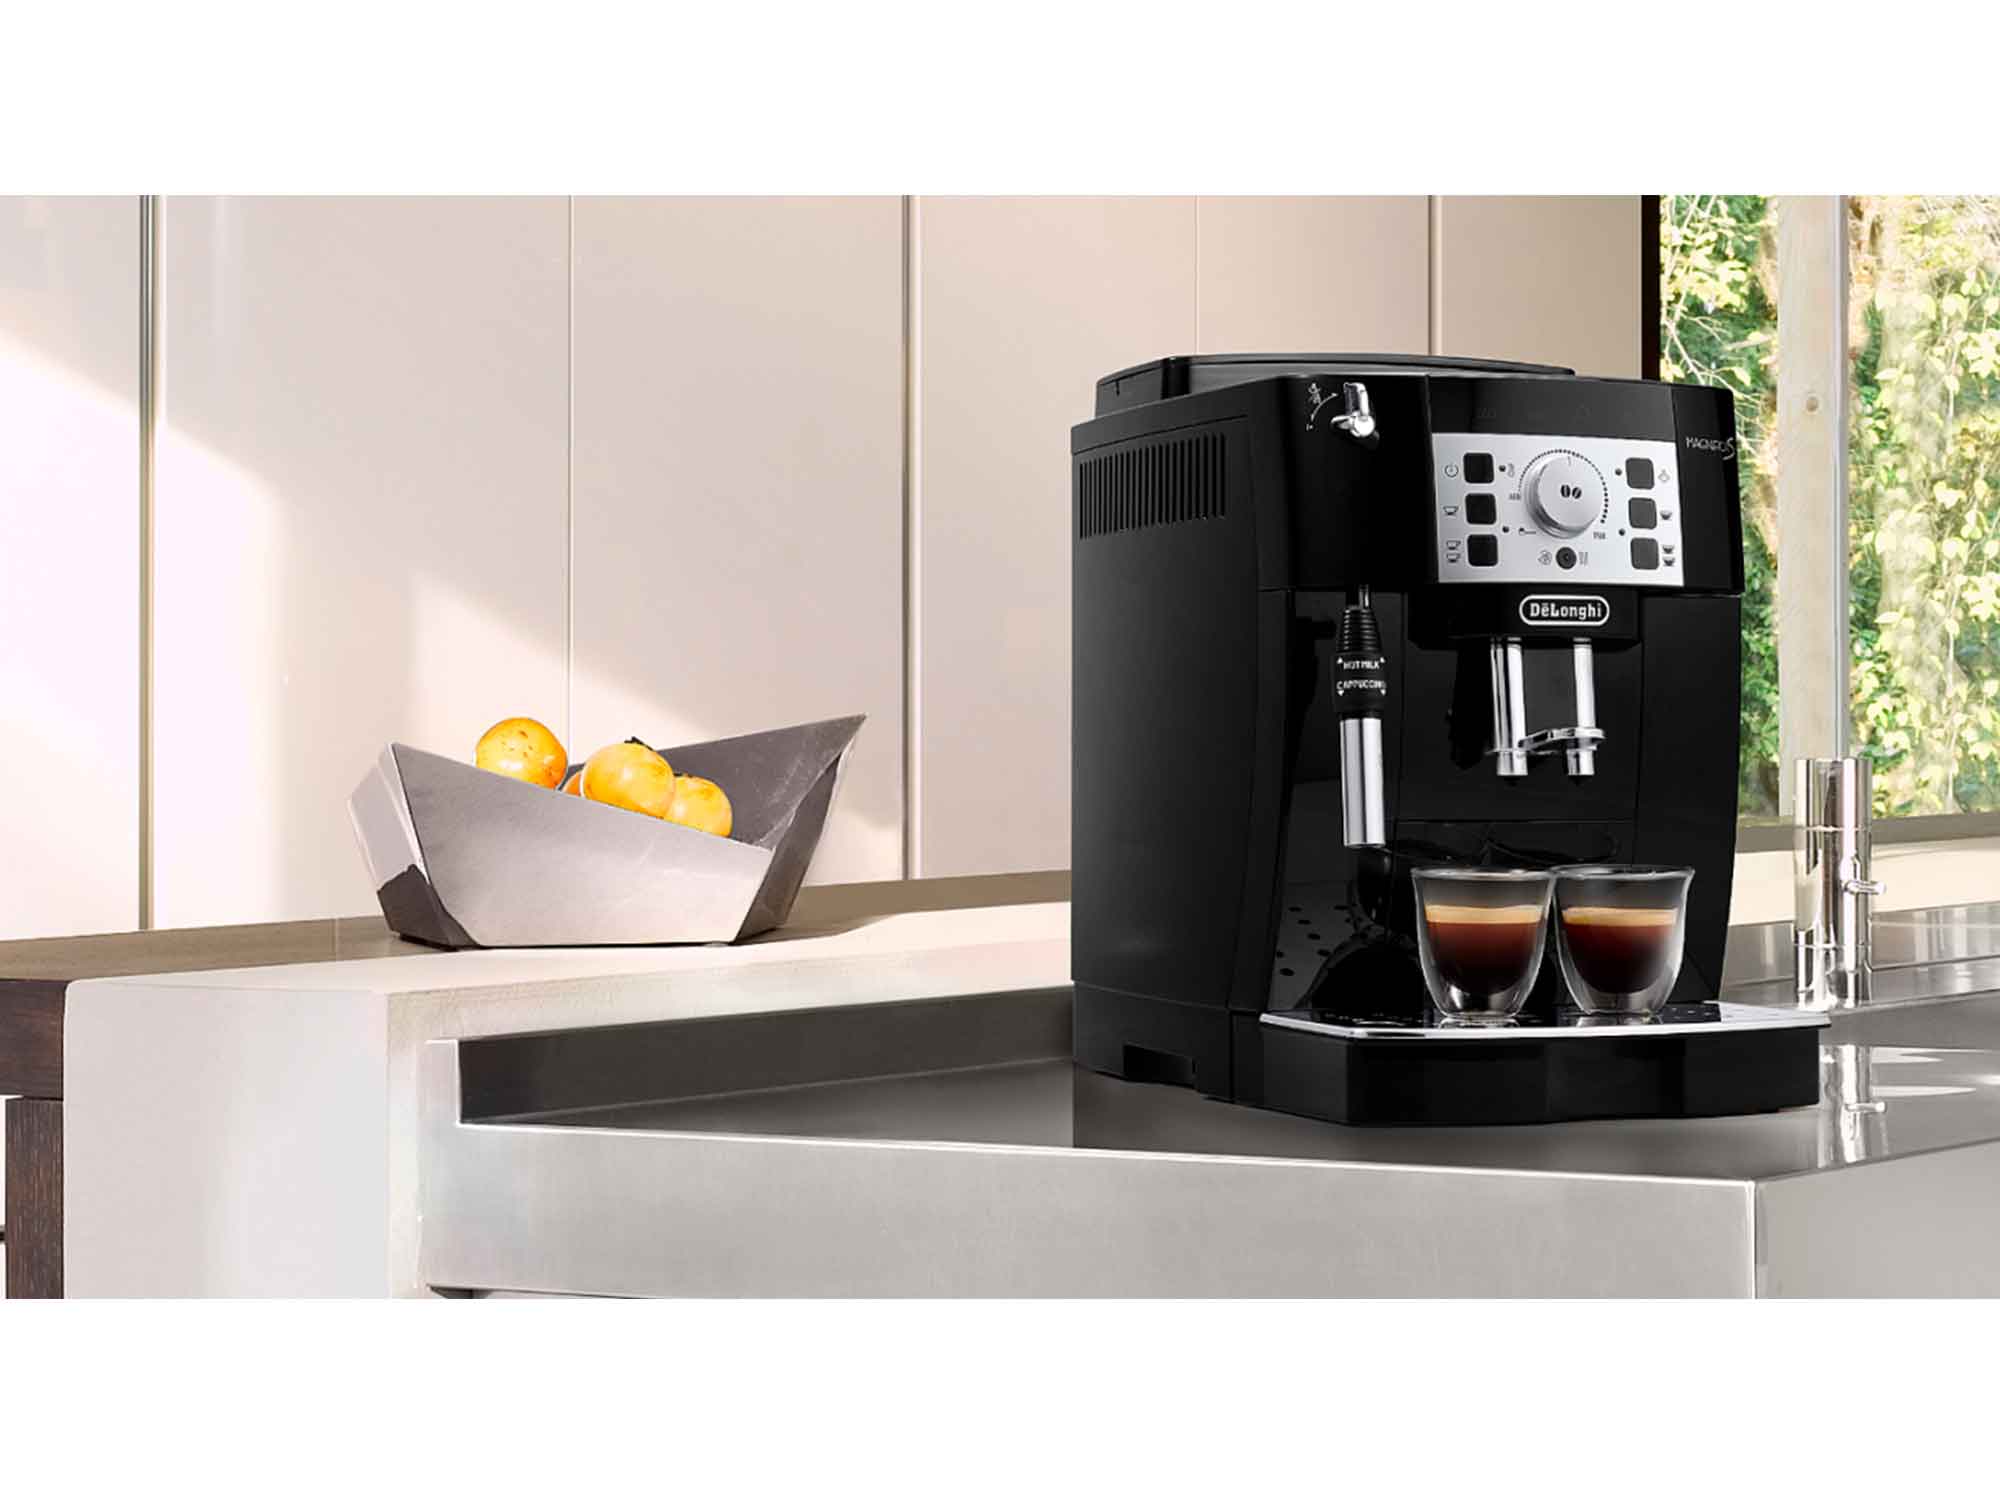 ECAM22.110.B Magnifica S Automatic coffee maker